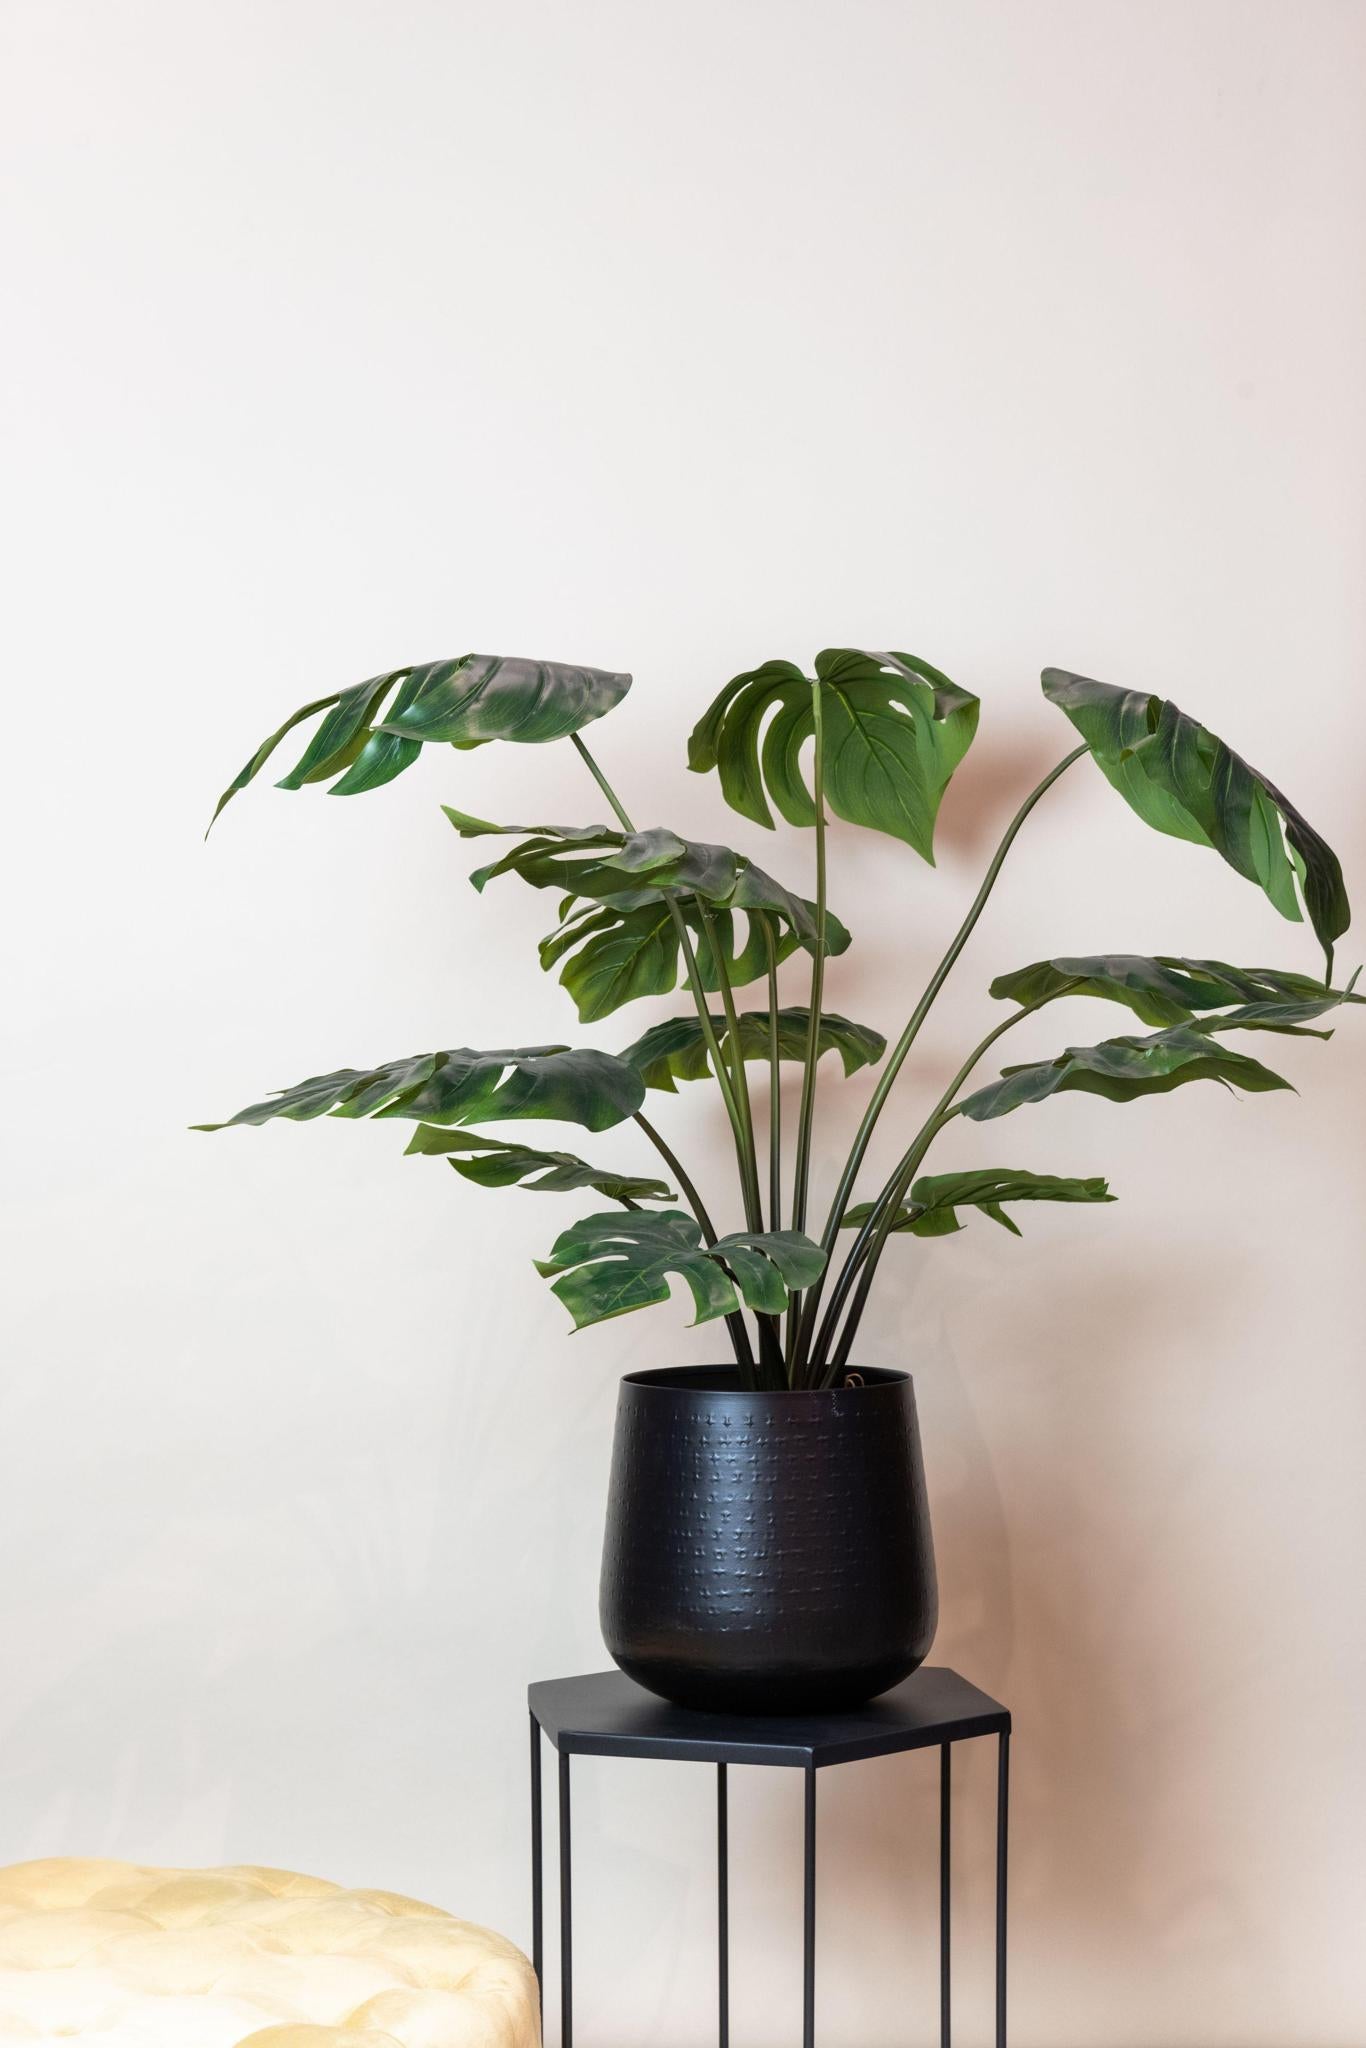 Kunstplant - Monstera Deliciosa - Gatenplant - 110 cm